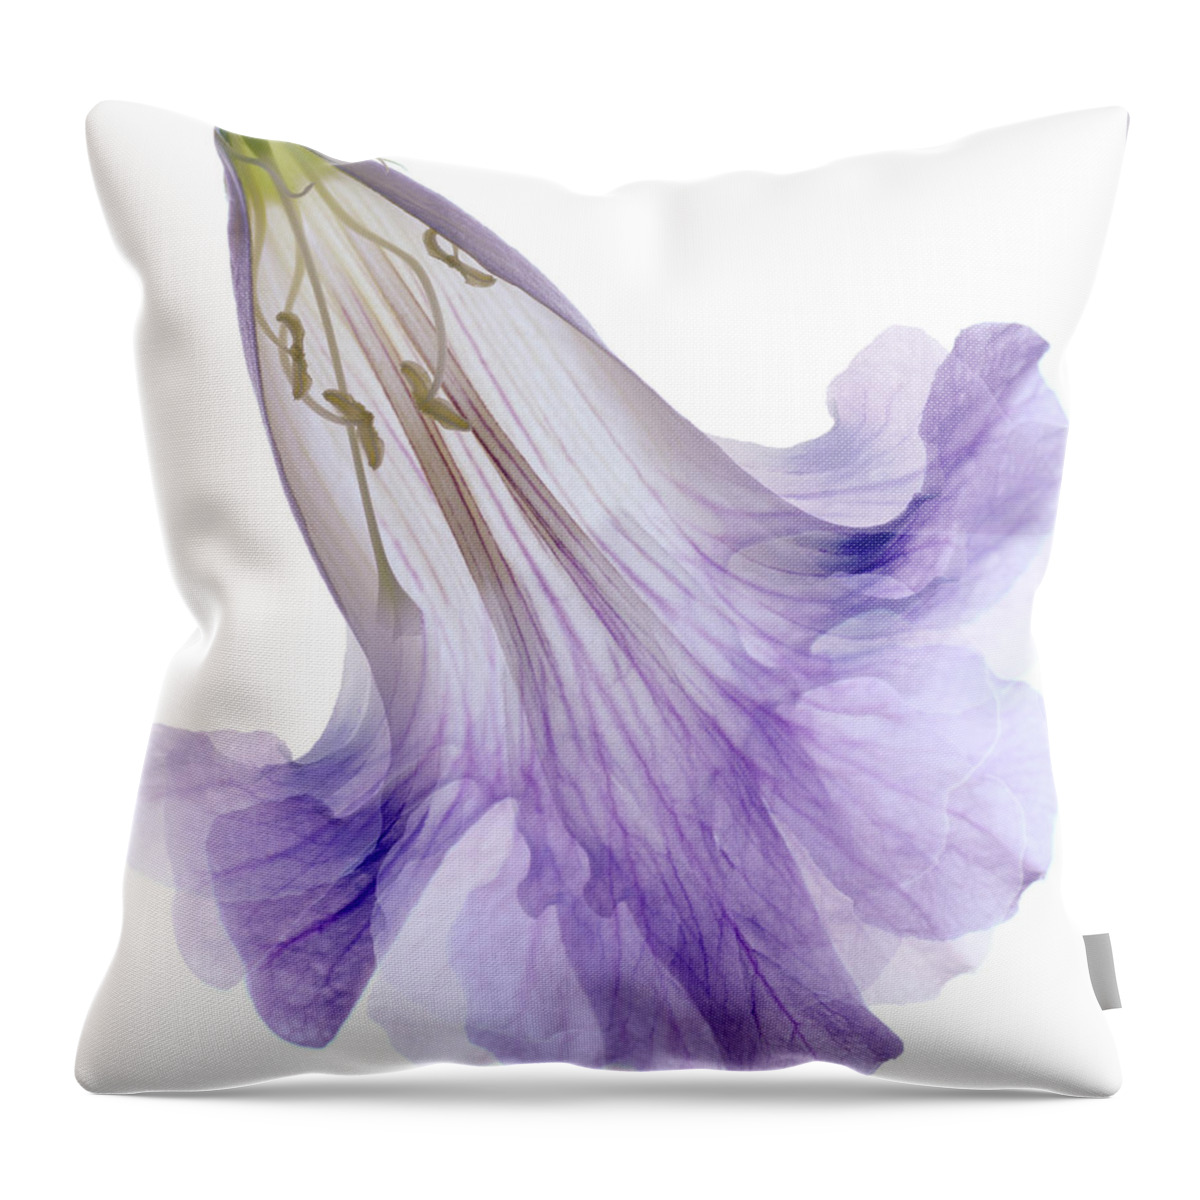 Lavender Throw Pillow featuring the photograph Lavender Crinoline by Marsha Tudor